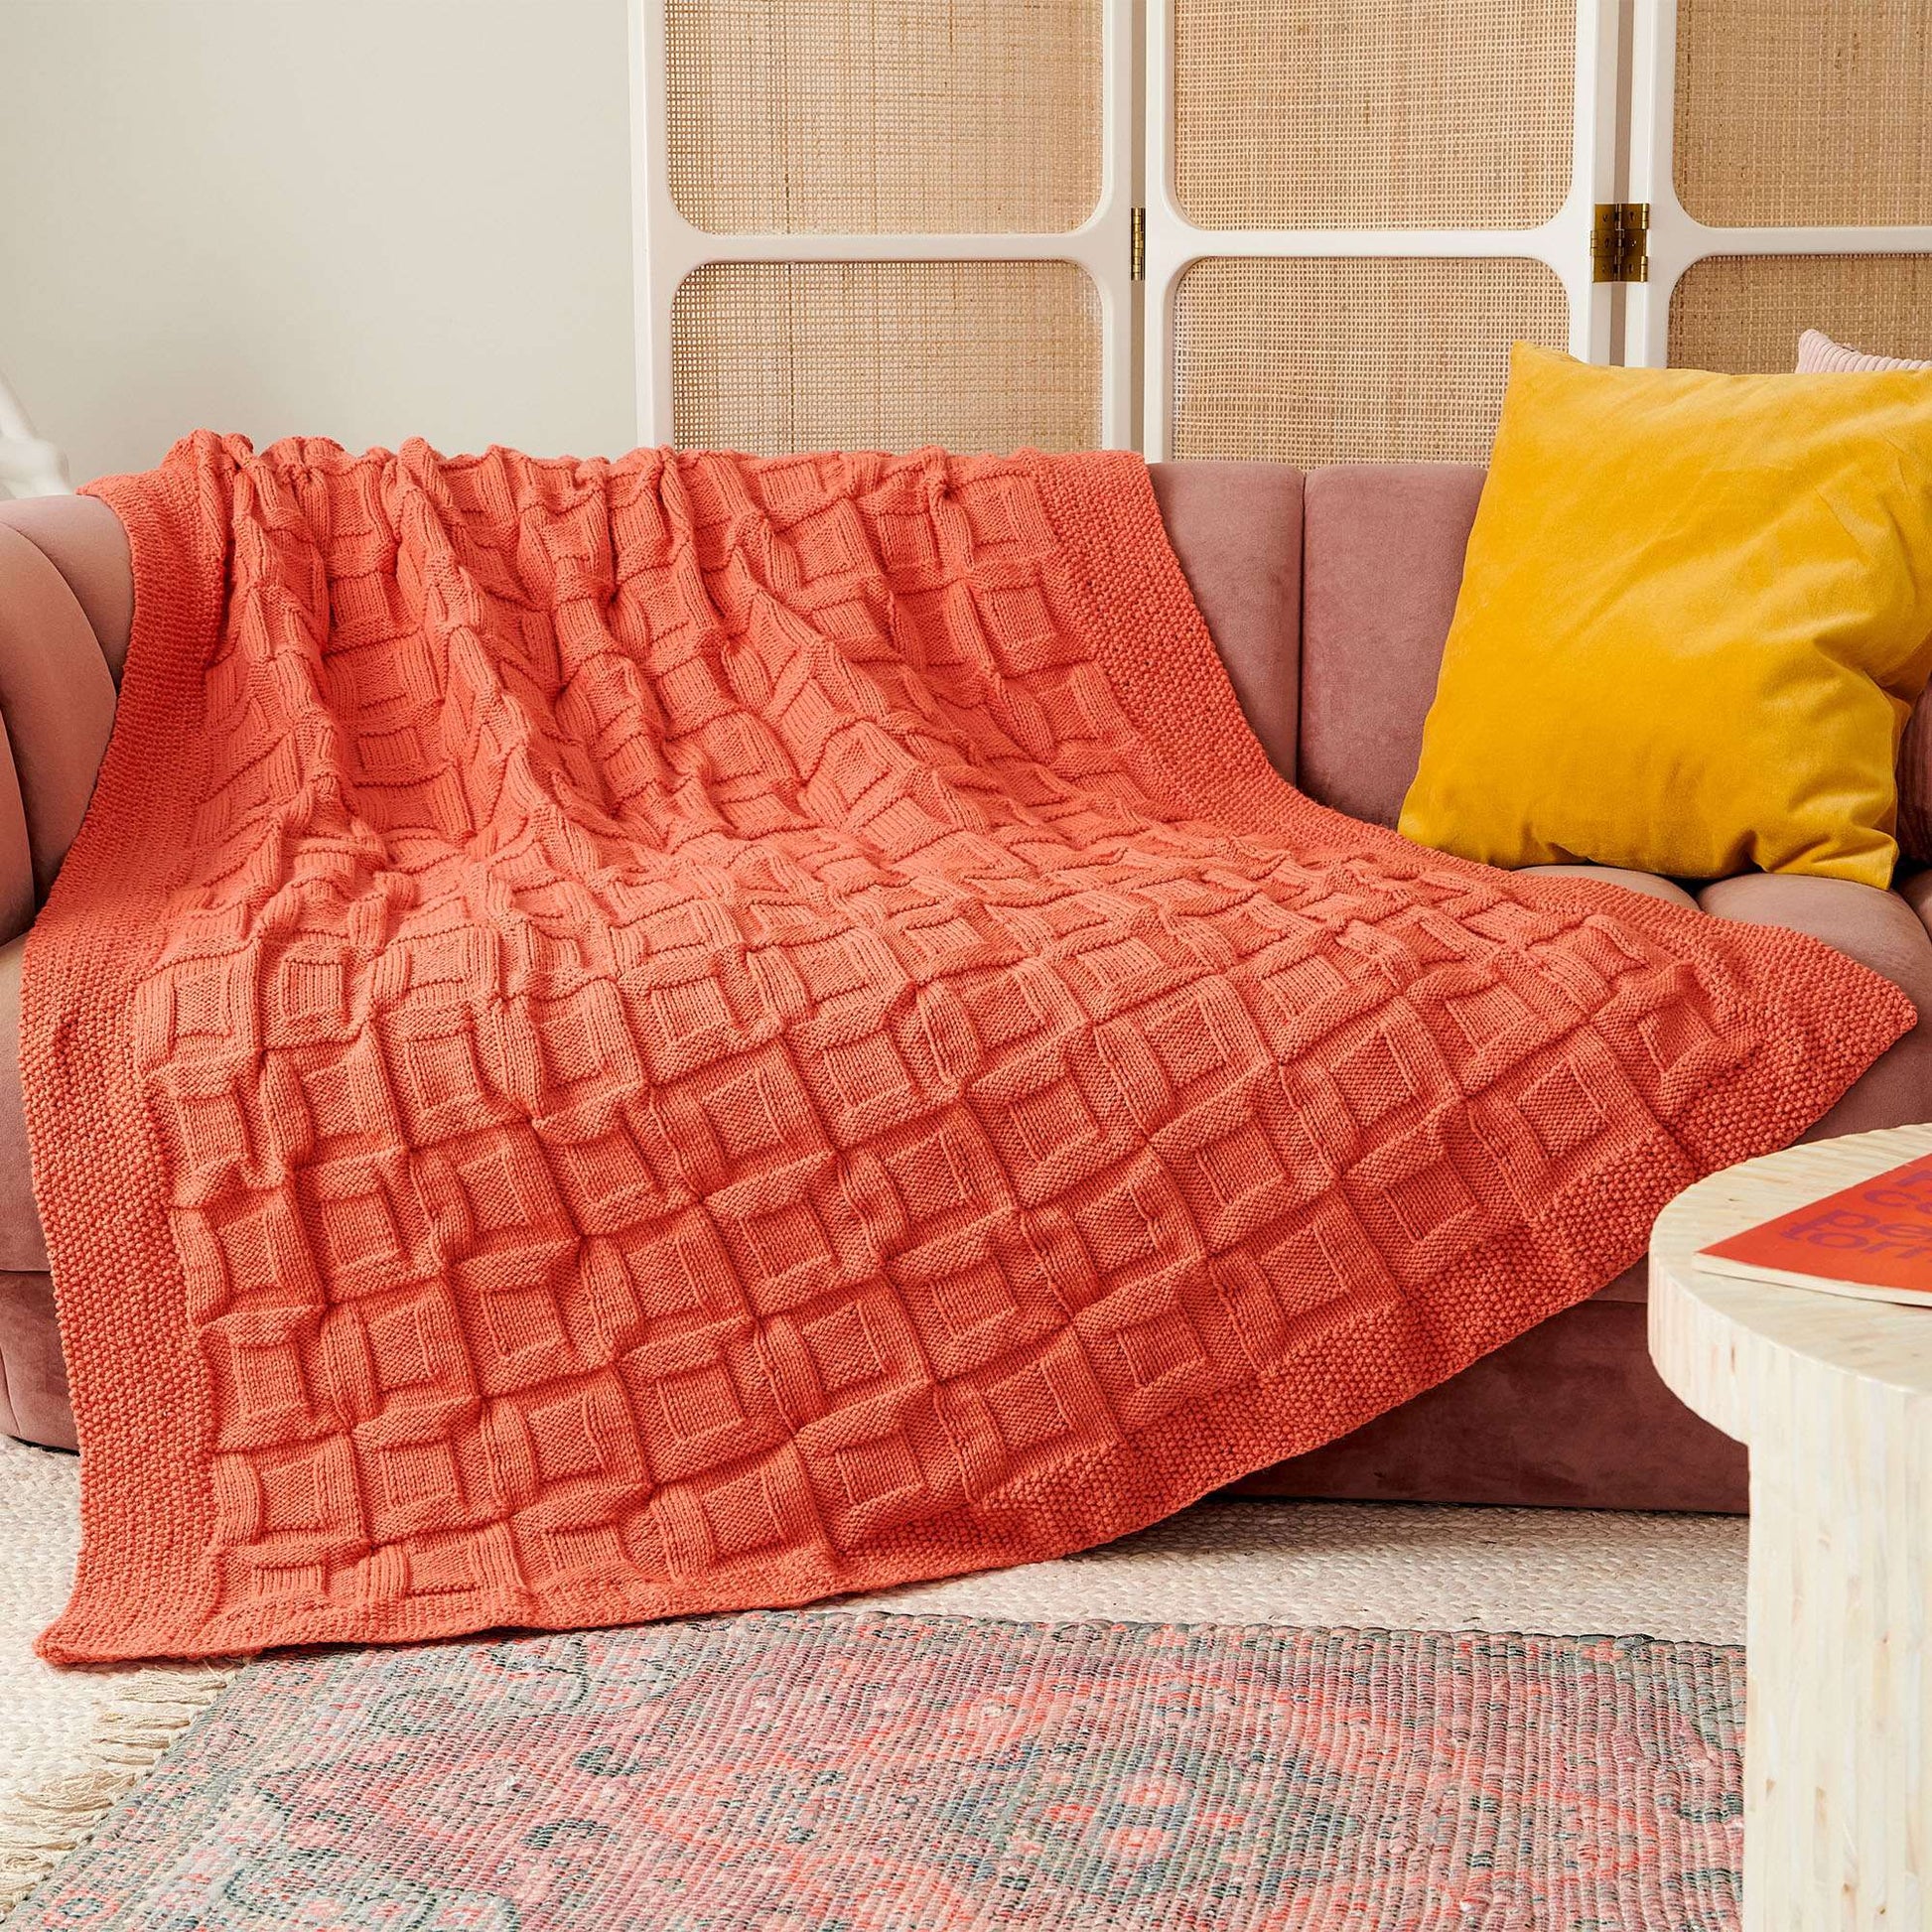 Free Caron Textured Checks Knit Blanket Pattern